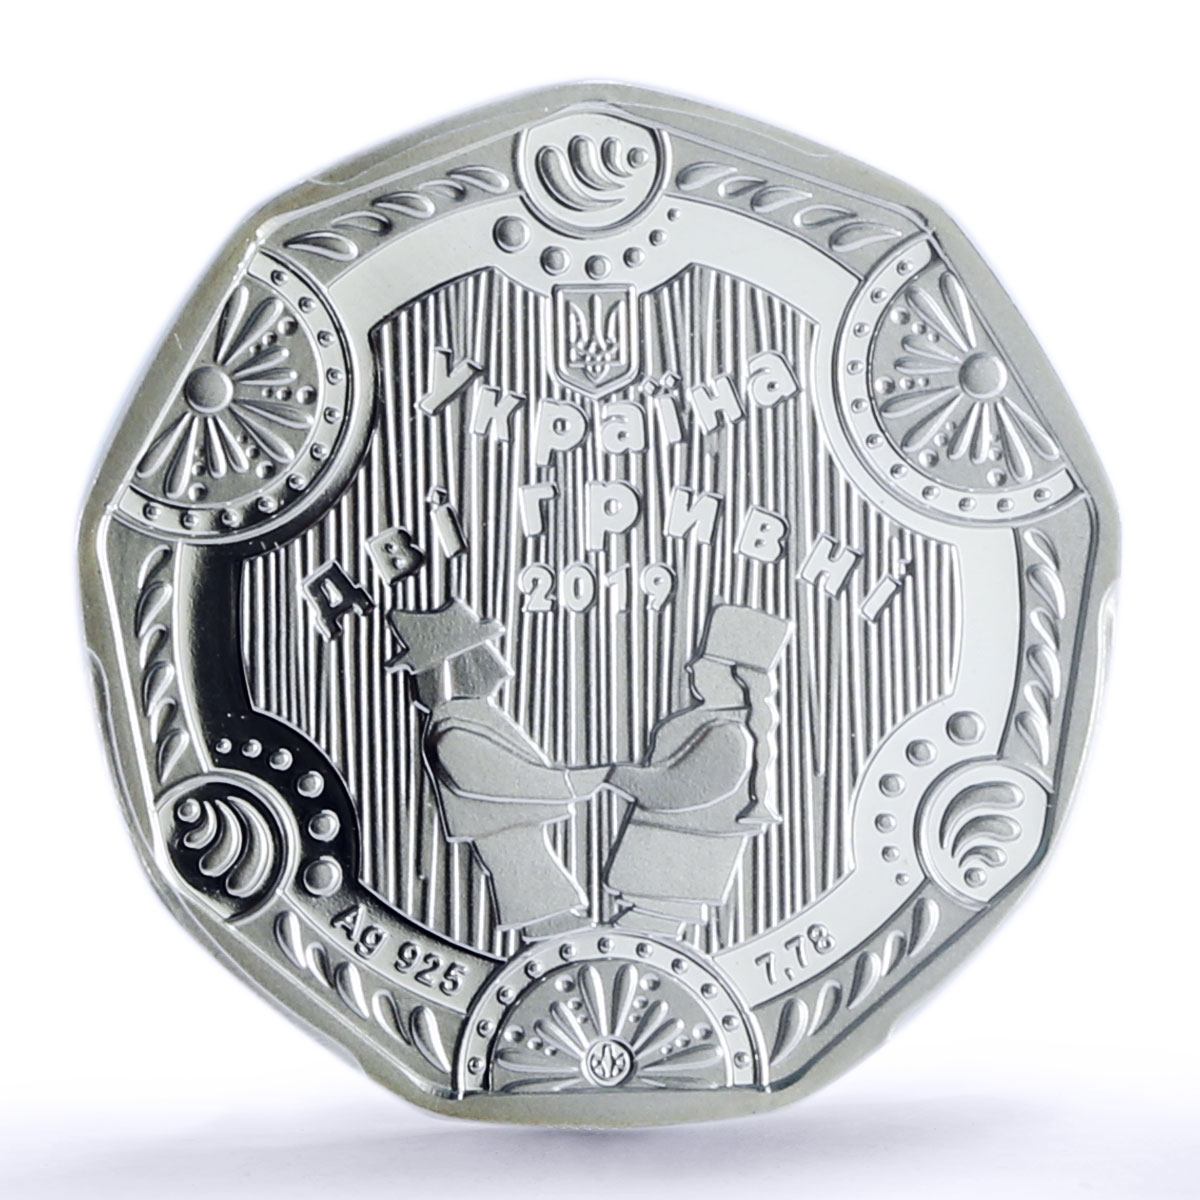 Ukraine 2 hryvni Yavoriv zabavka Roisterers  SP70 PCGS silver coin 2019